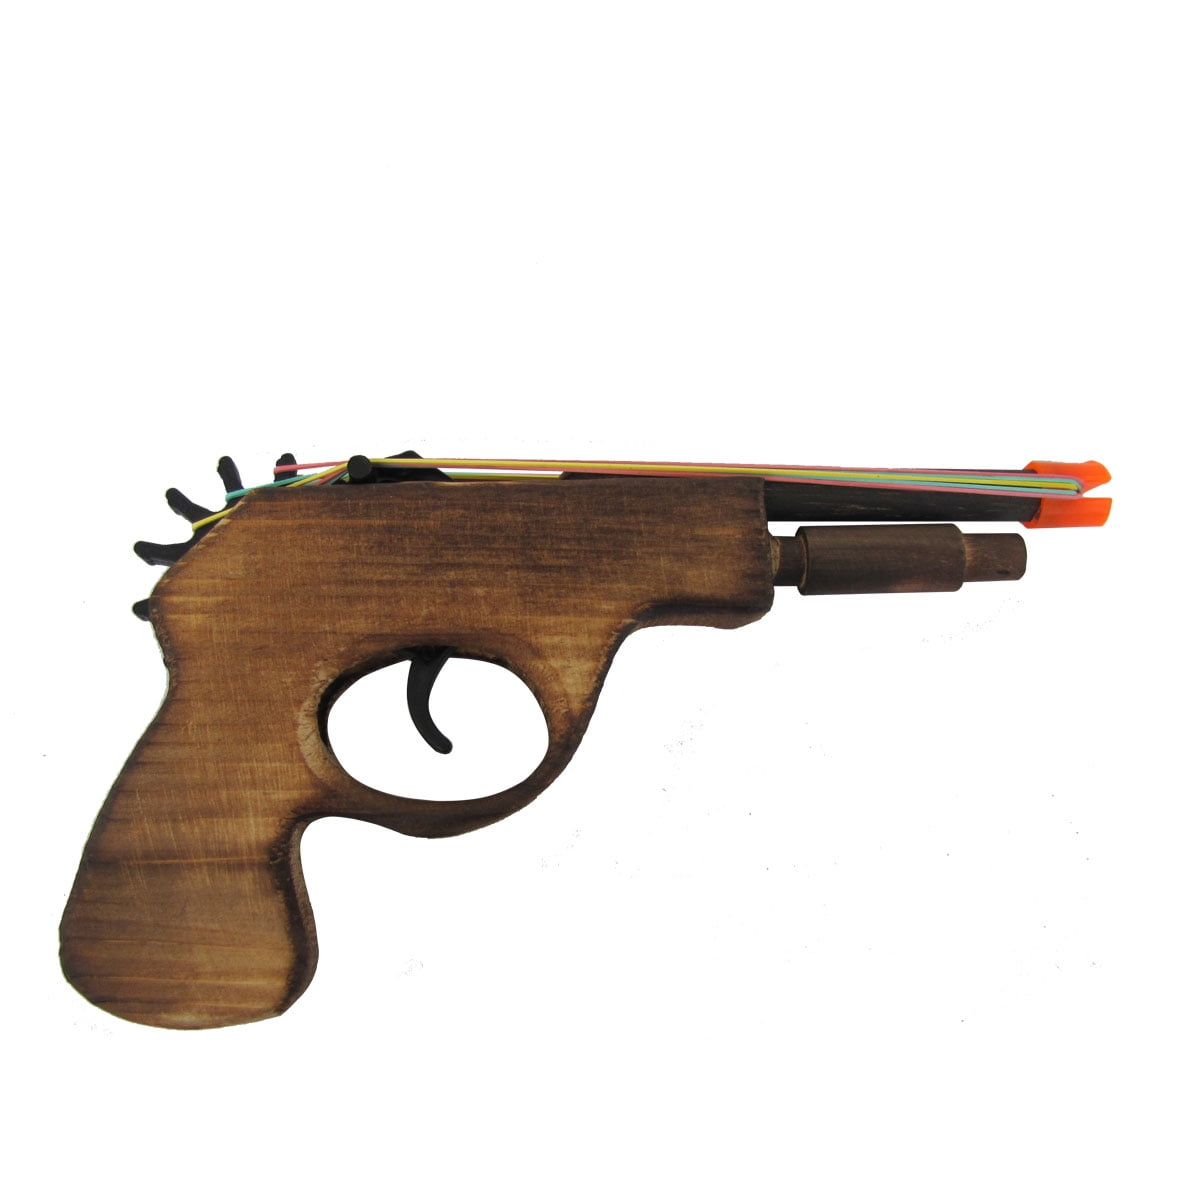 2 SOLID WOOD ELASTIC SHOOTING LONG BARREL GUN 12 IN rubber band shoot toy pistol 